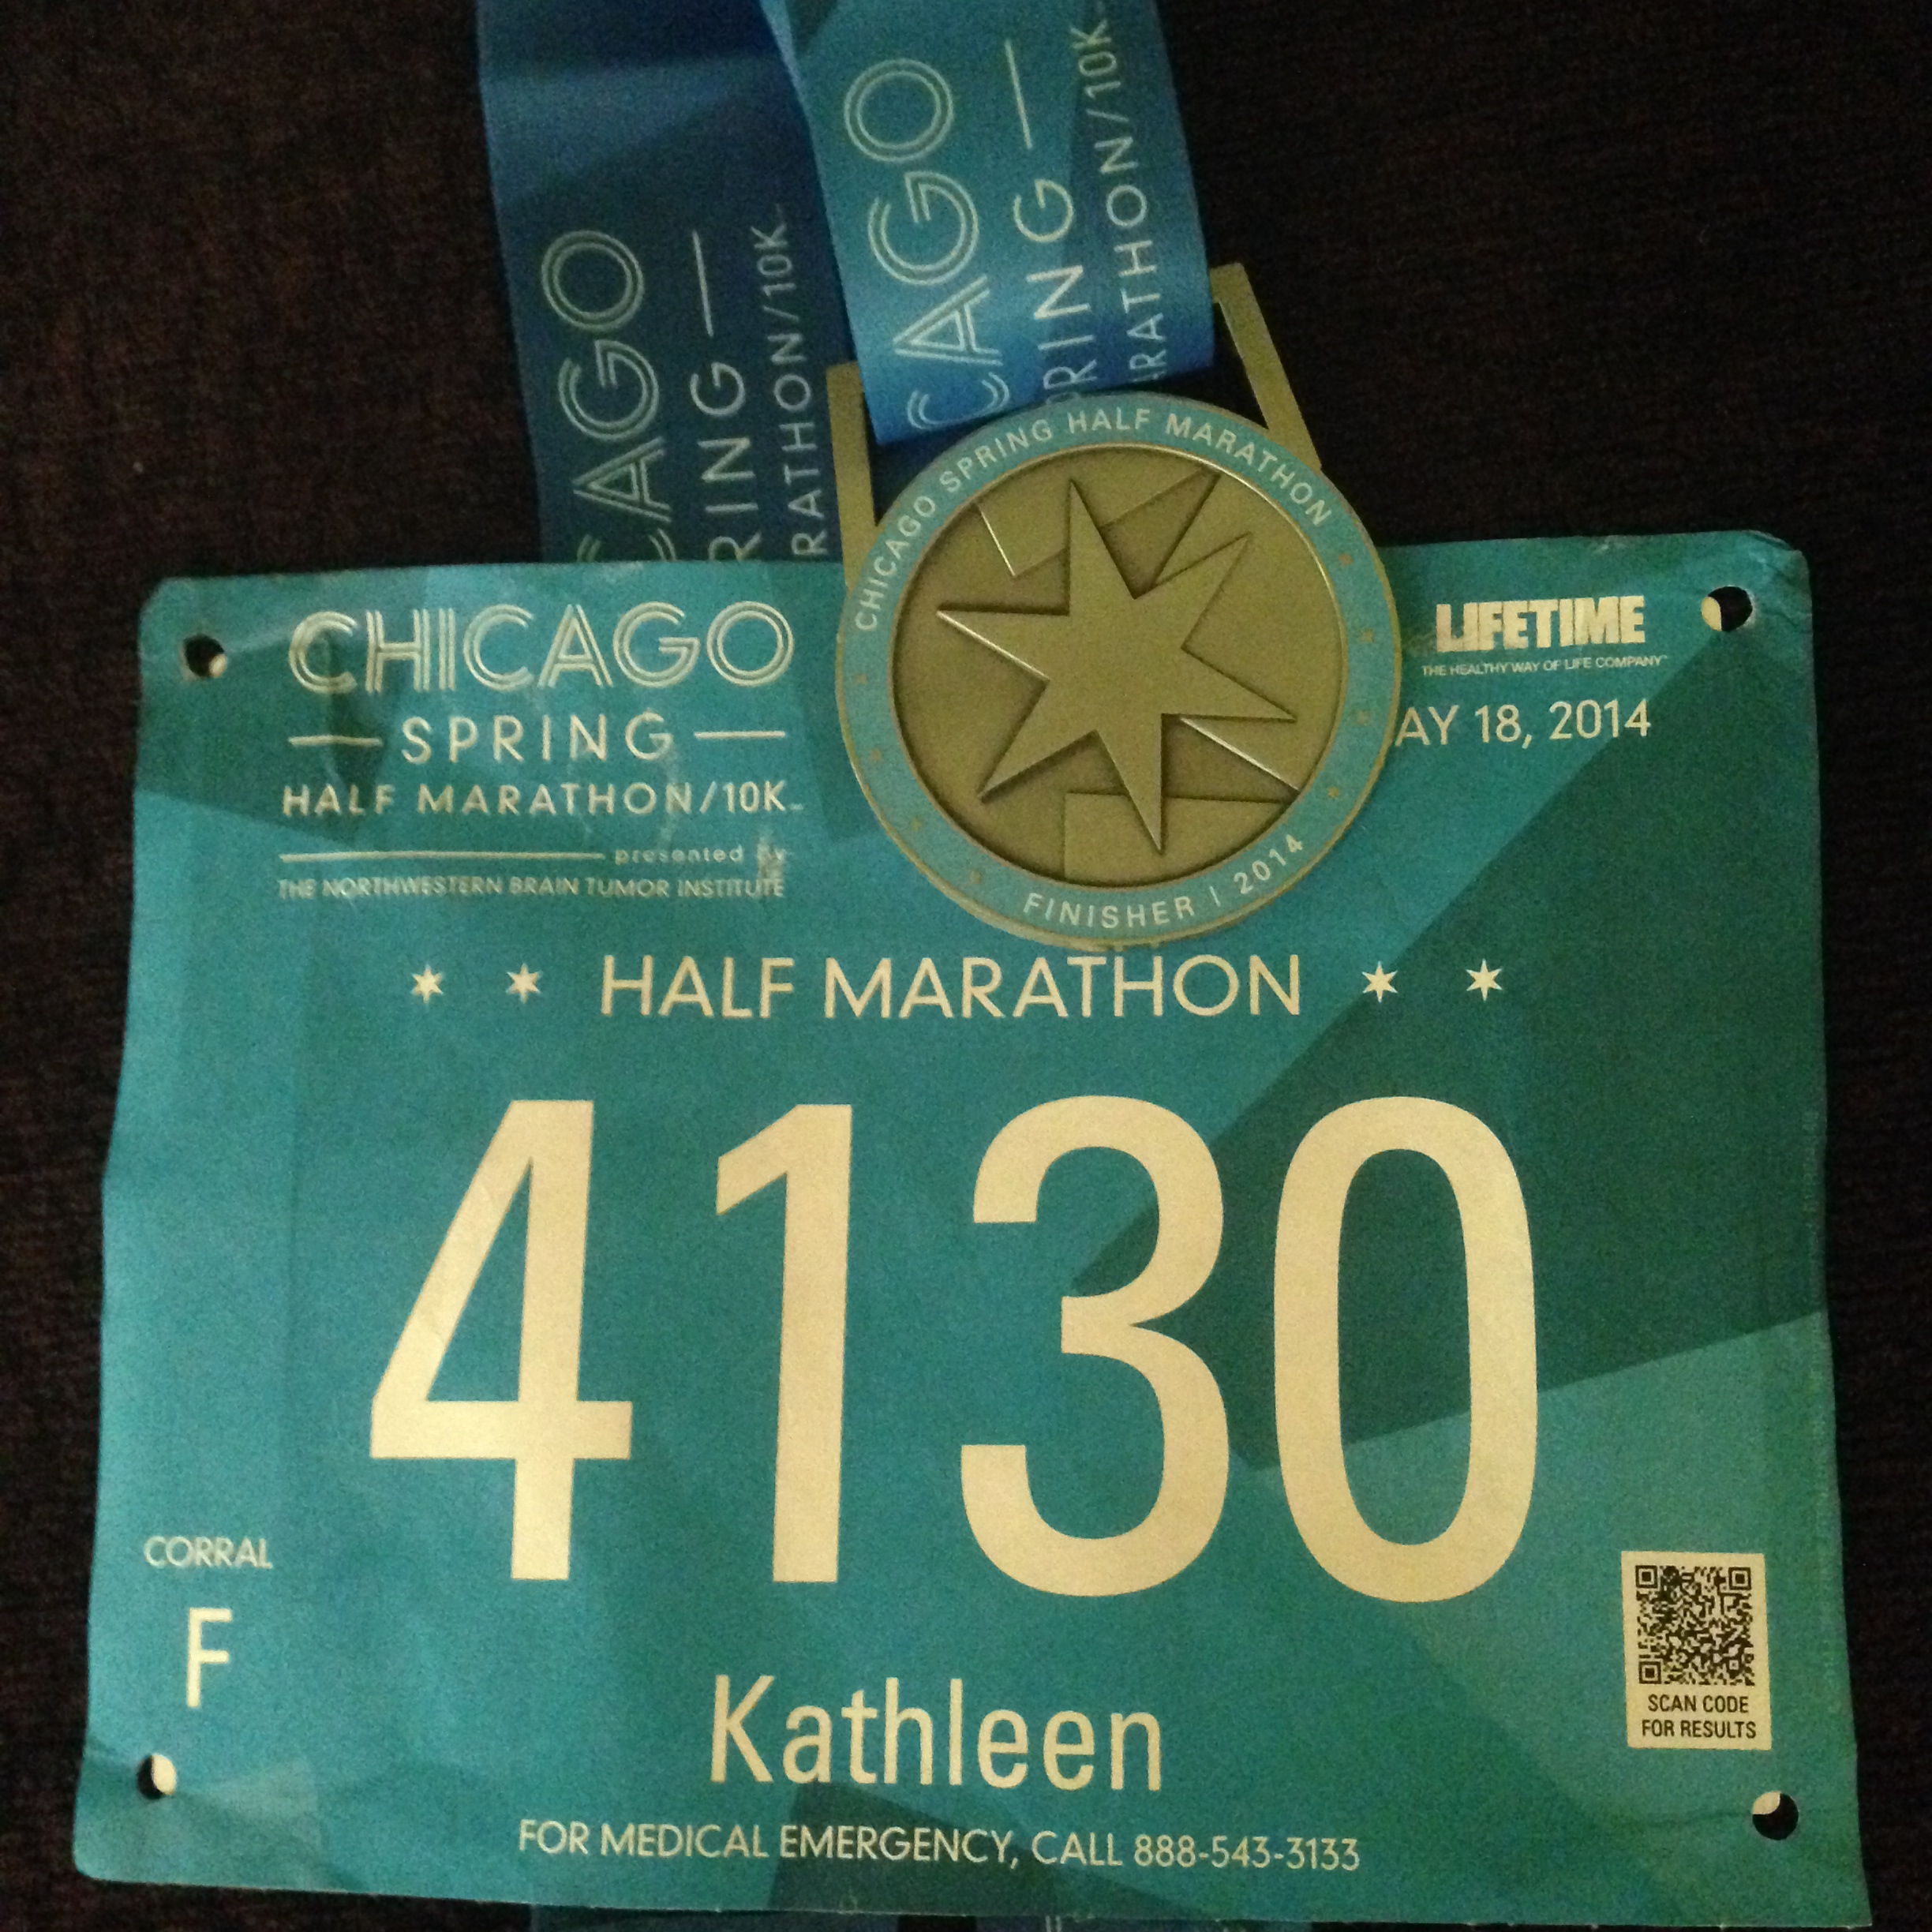 My sixth half marathon: done